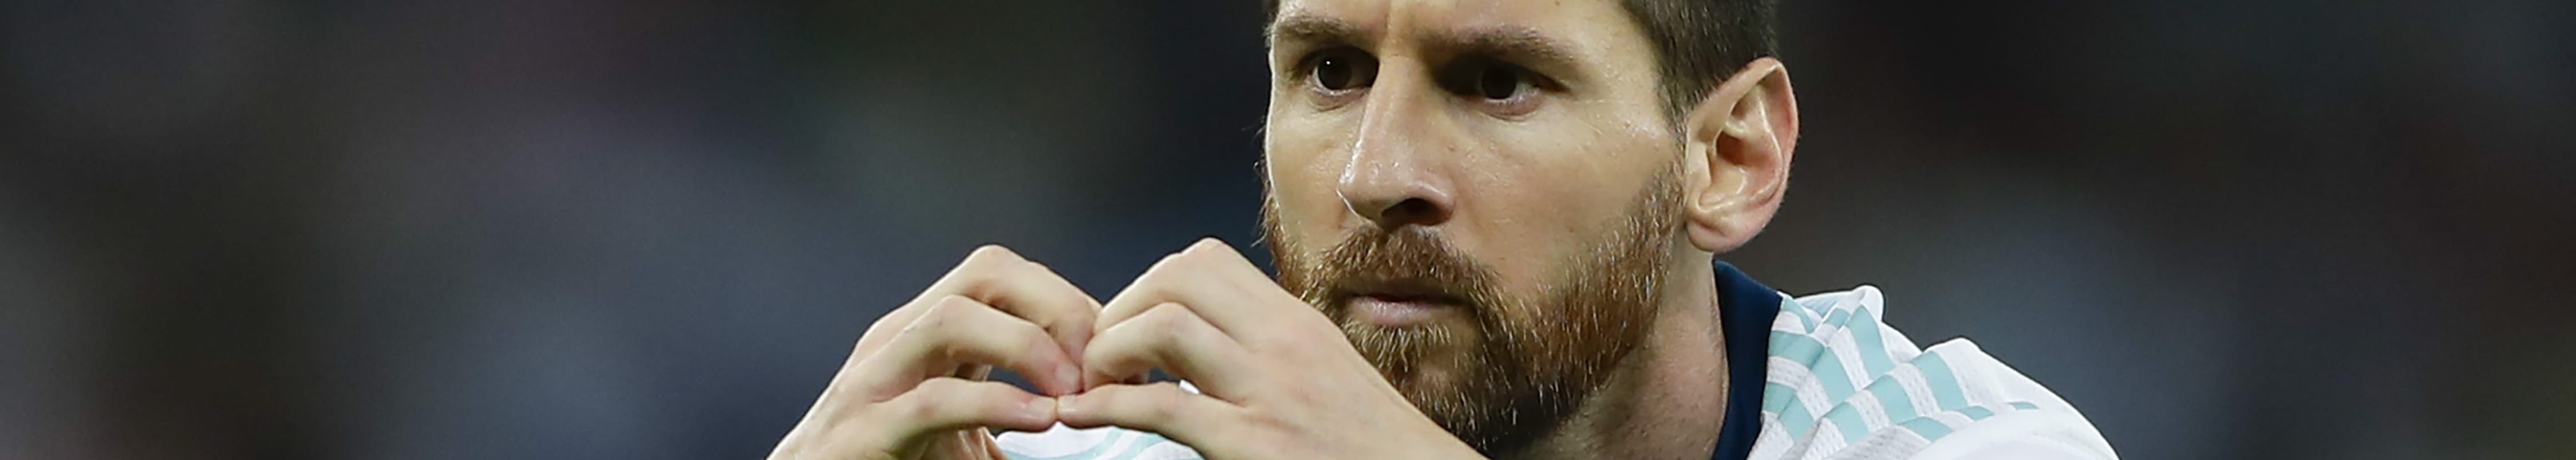 Qatar-Argentina, Messi deve scongiurare un clamoroso flop